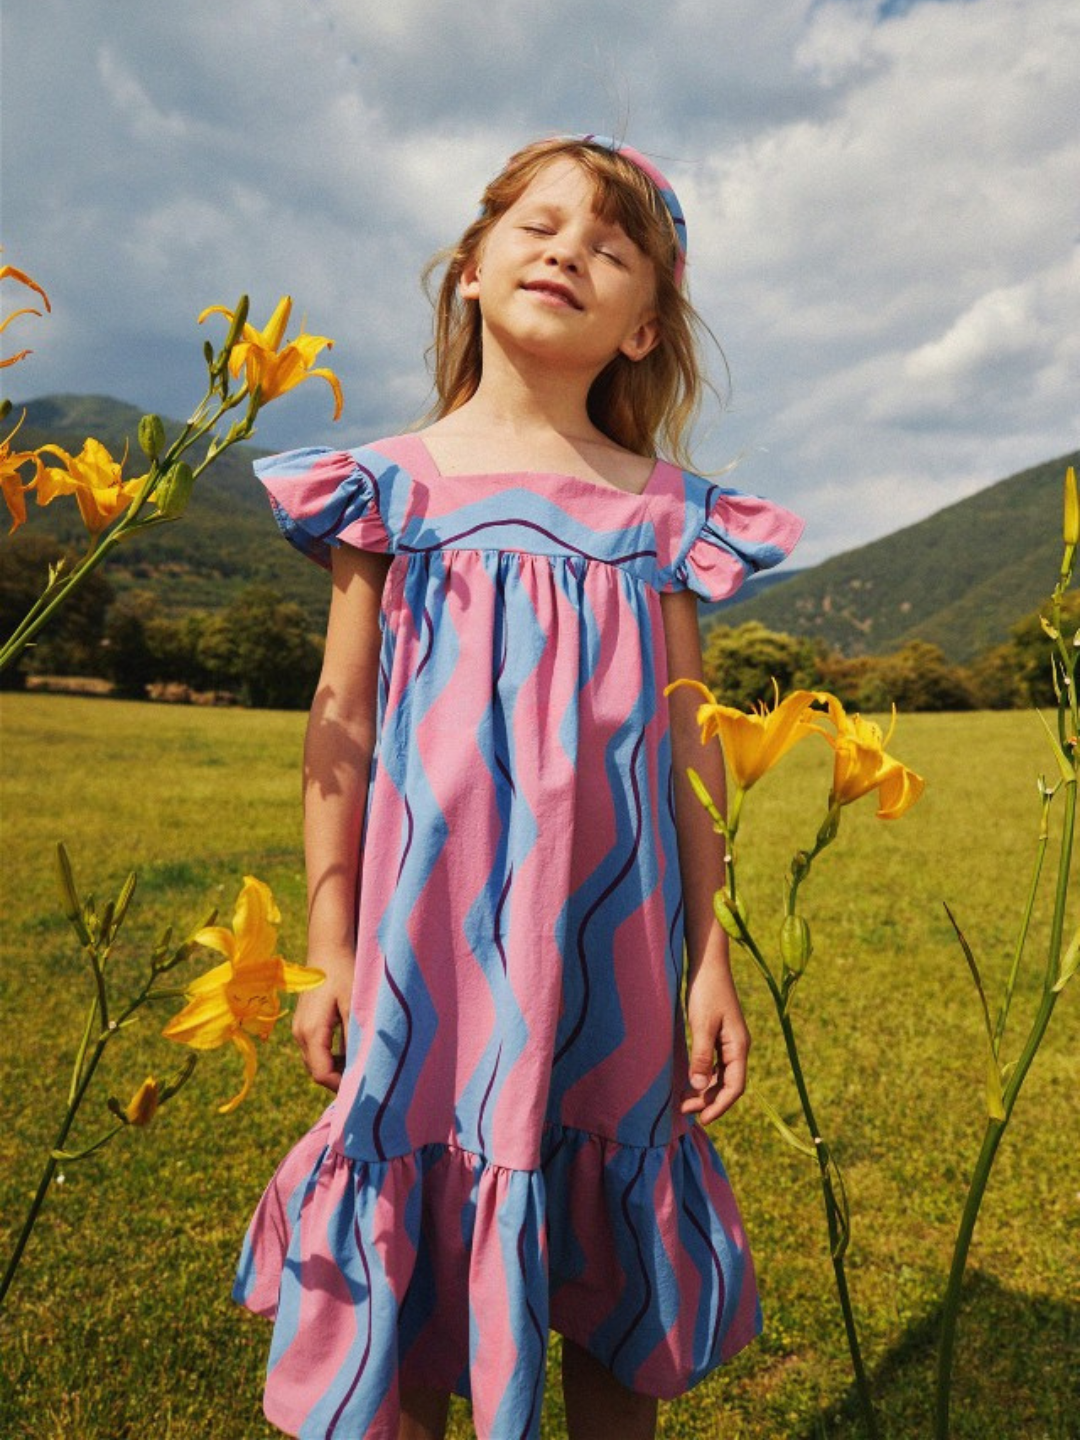 Child wearing Wave Stripe Dress outdoors.